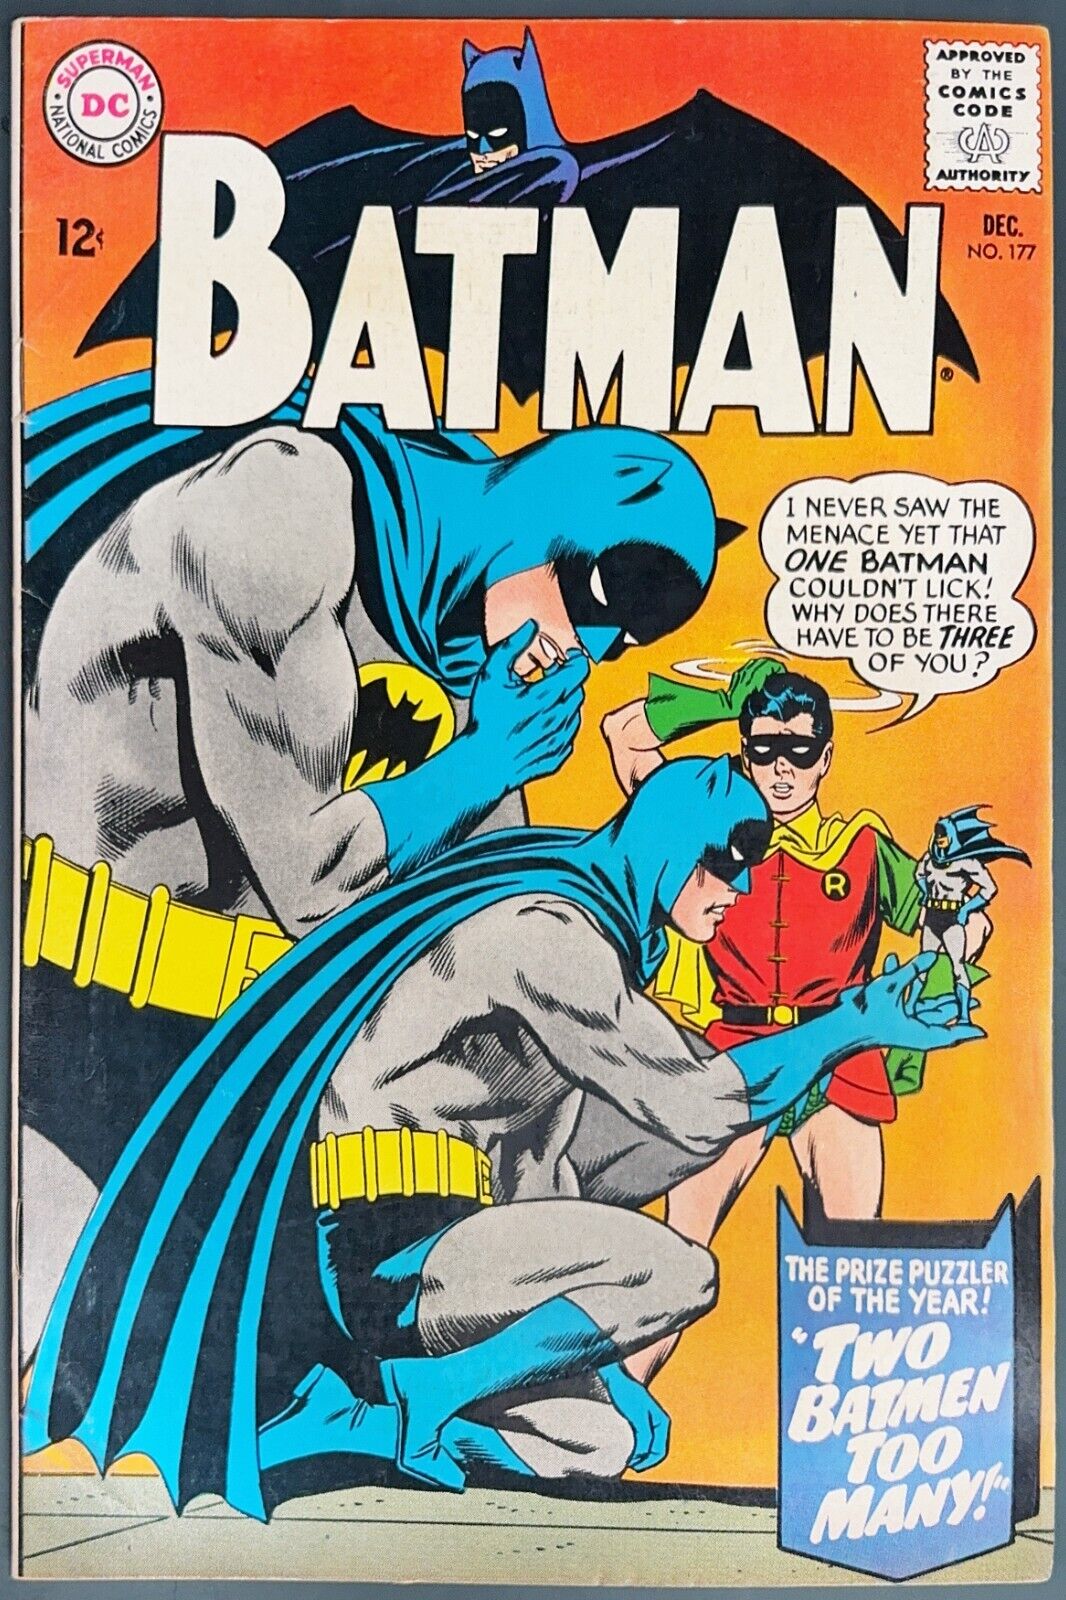 Batman #177 (1965) Cover by Carmine Infantino - High Grade Silver Age (VF)